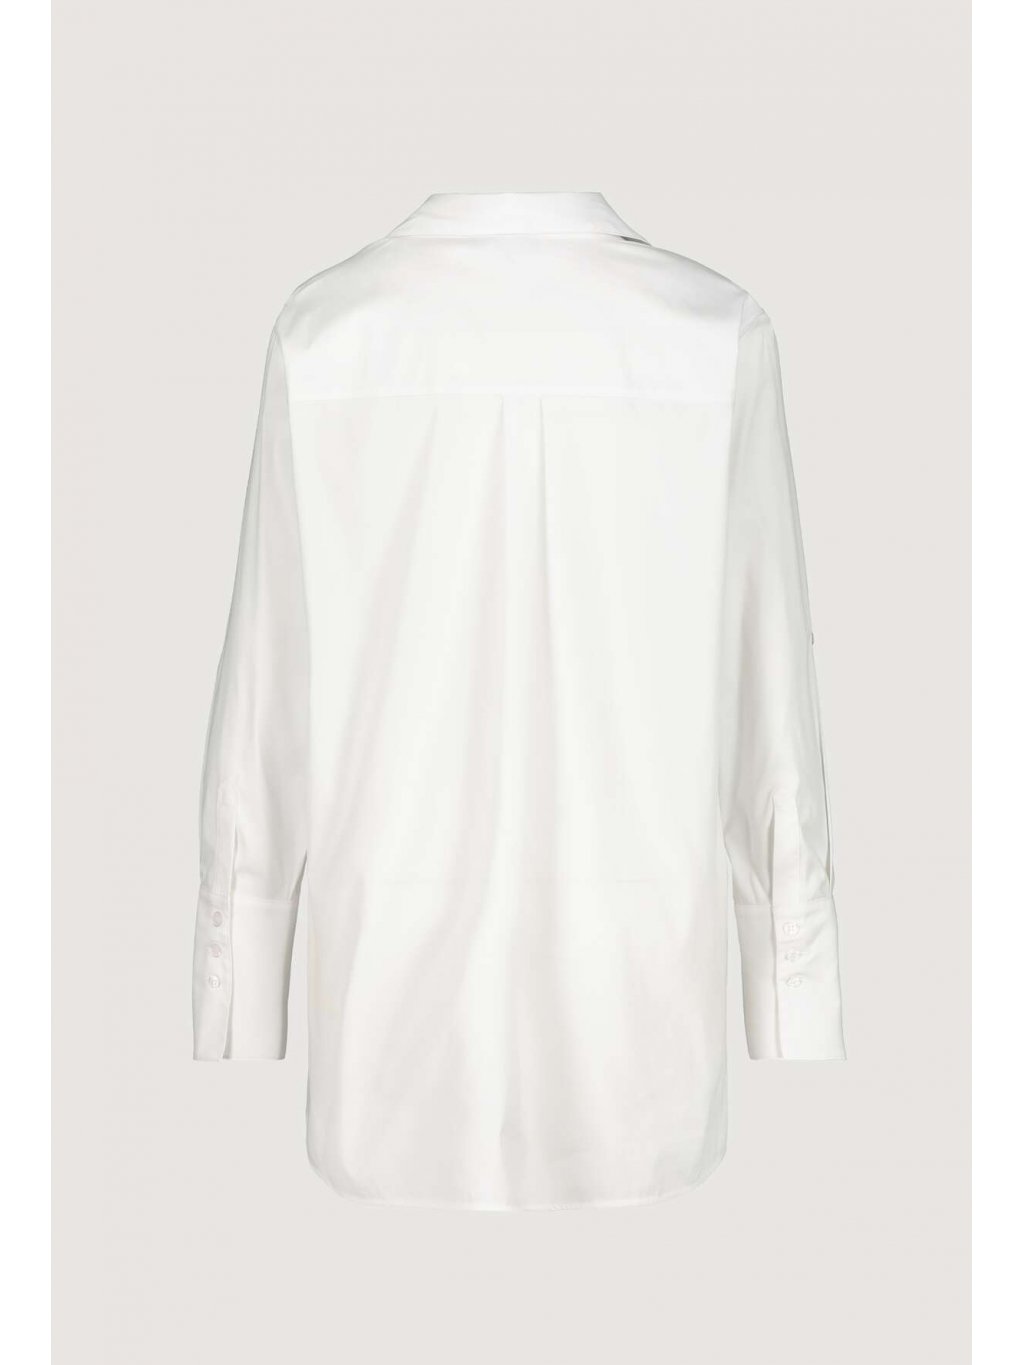 Košile Monari 6652 bílá prodloužená